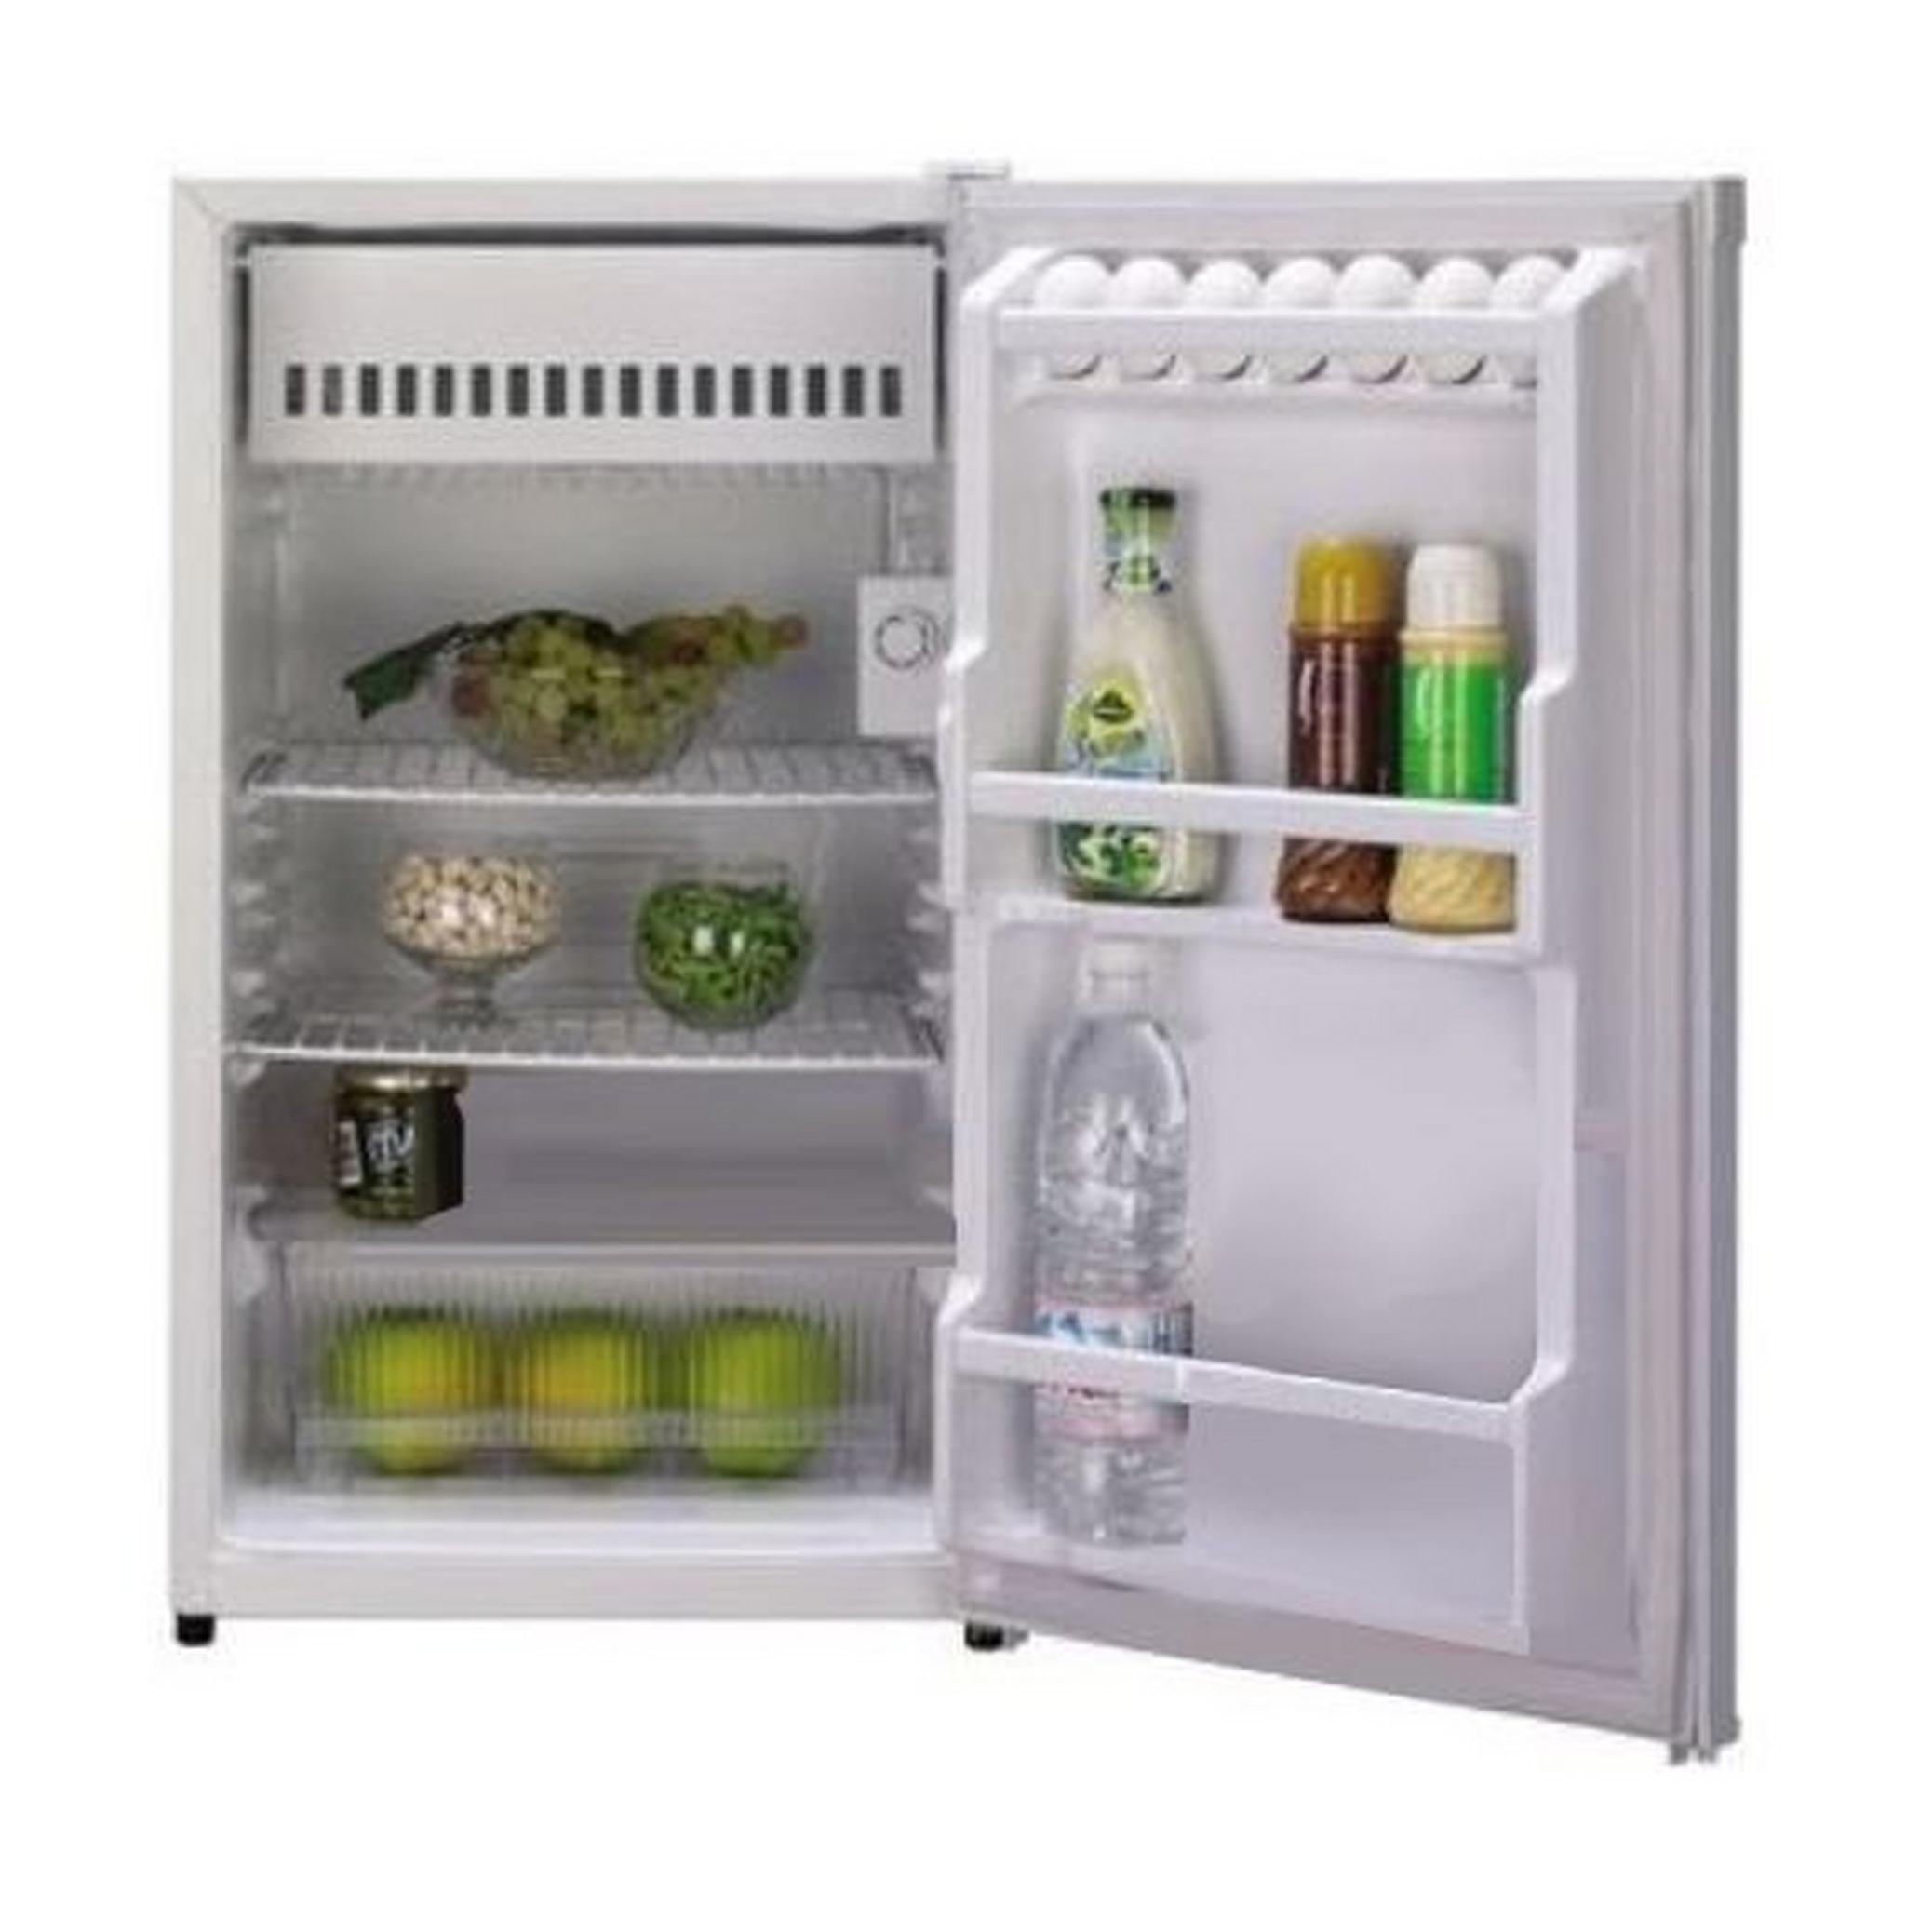 Daewoo 5 Cft. Single Door Refrigerator (FR146) - White